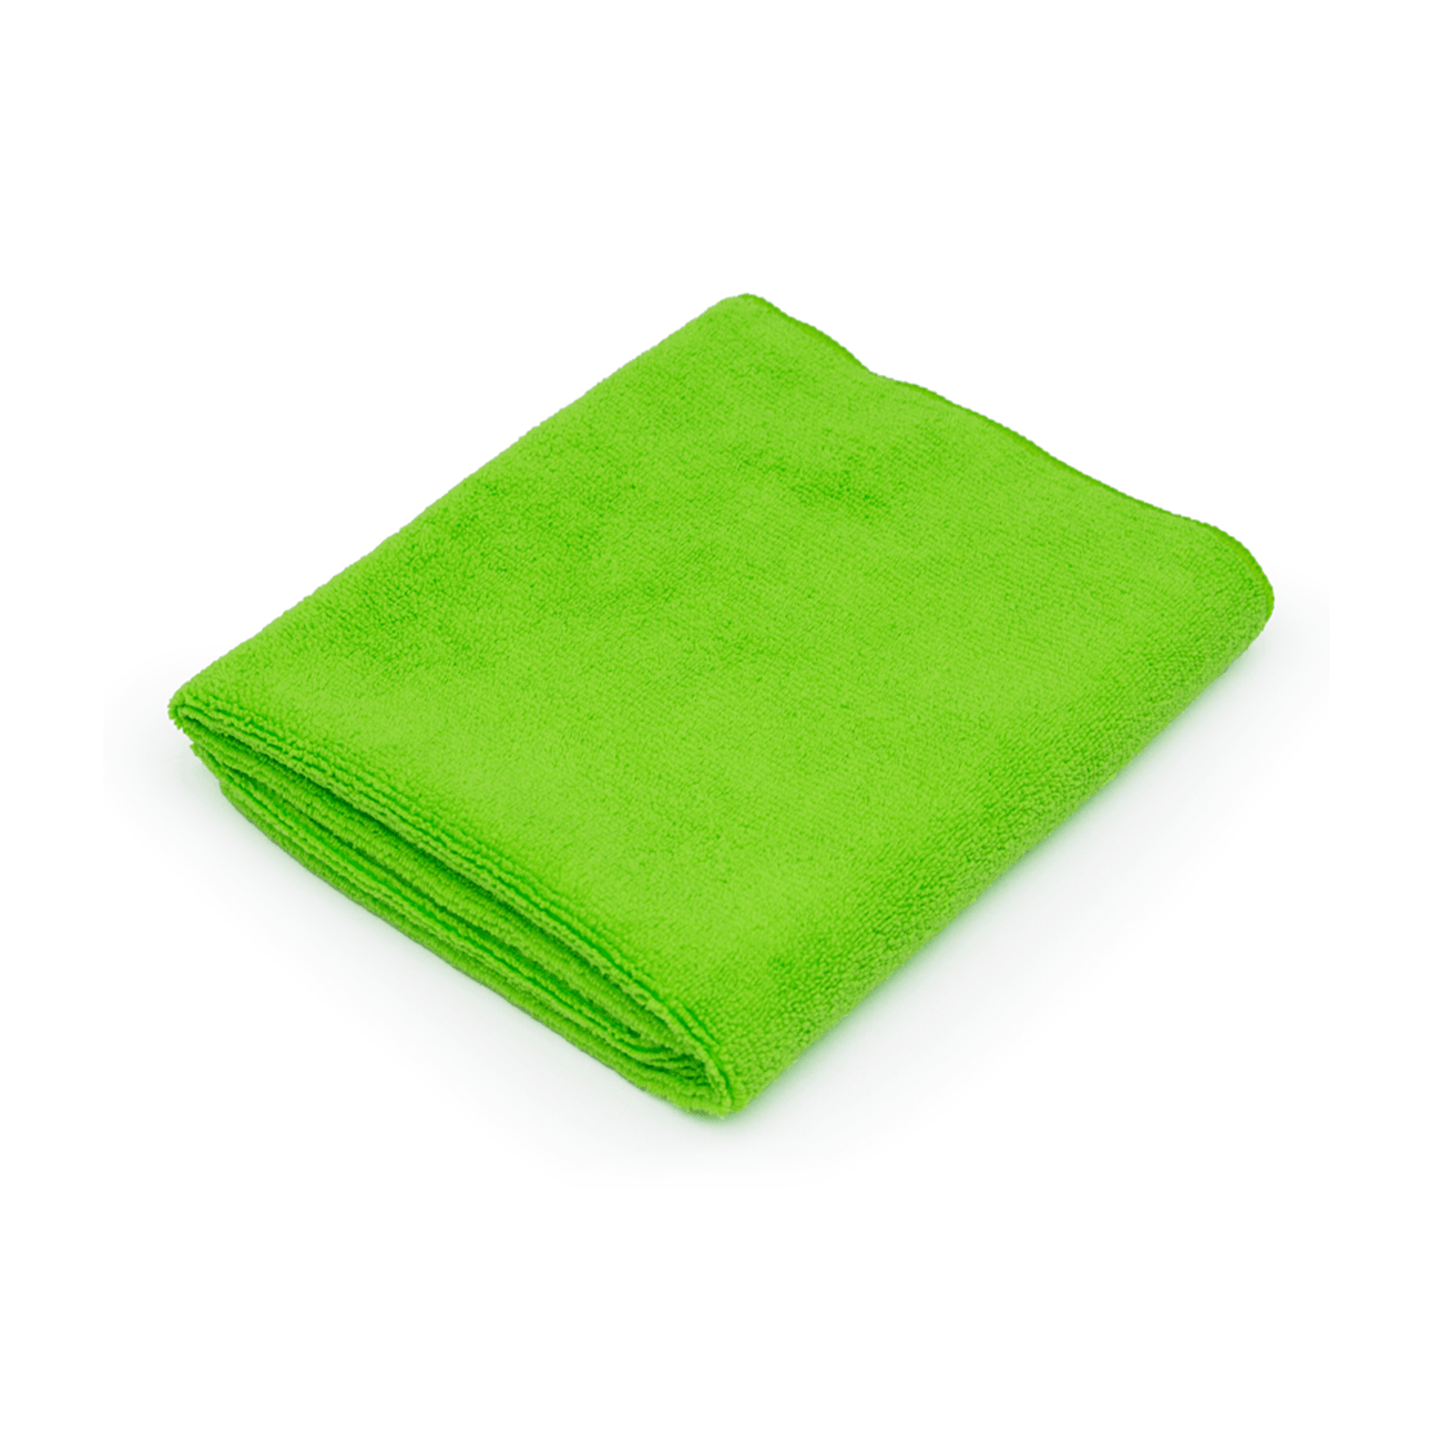 The Microfiber "Car Wash" Towel